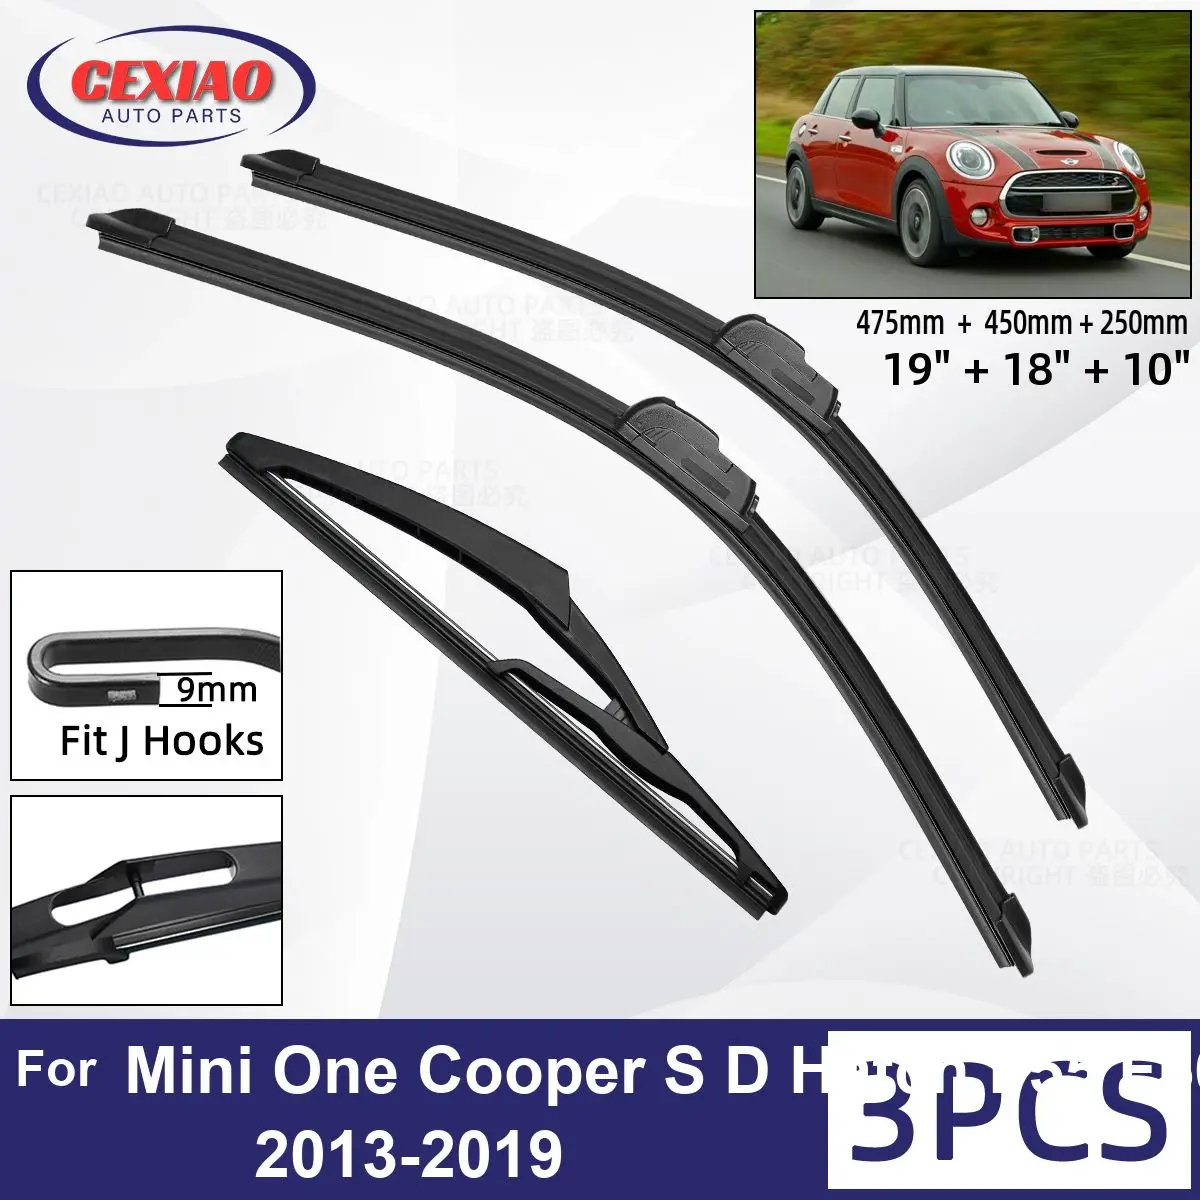 For MINI Mini One Cooper S D Hatch F55 F56 2013 - 2019 Car Front Rear Wiper Blades Windscreen Wipers Auto Windshield 19"+18"+10"